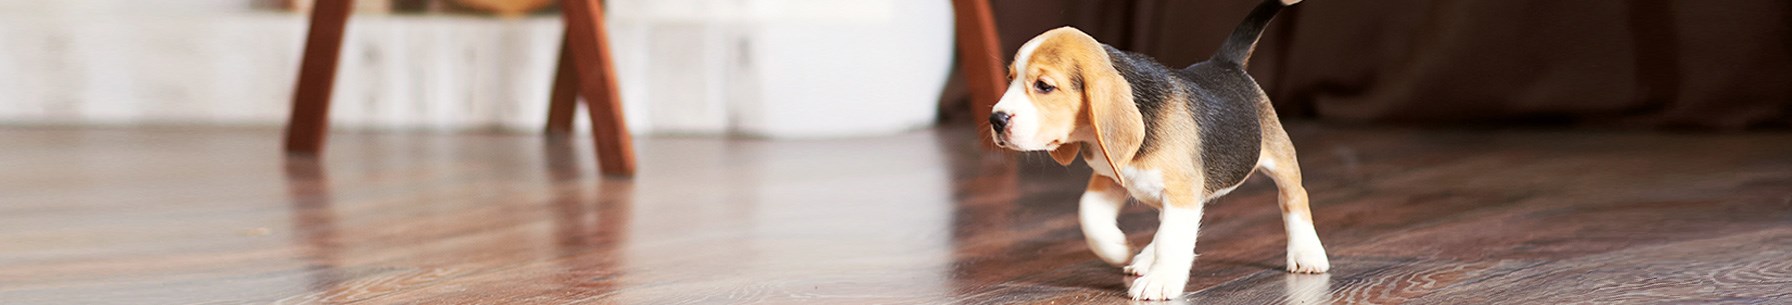 beagle puppy walking along wooden floor